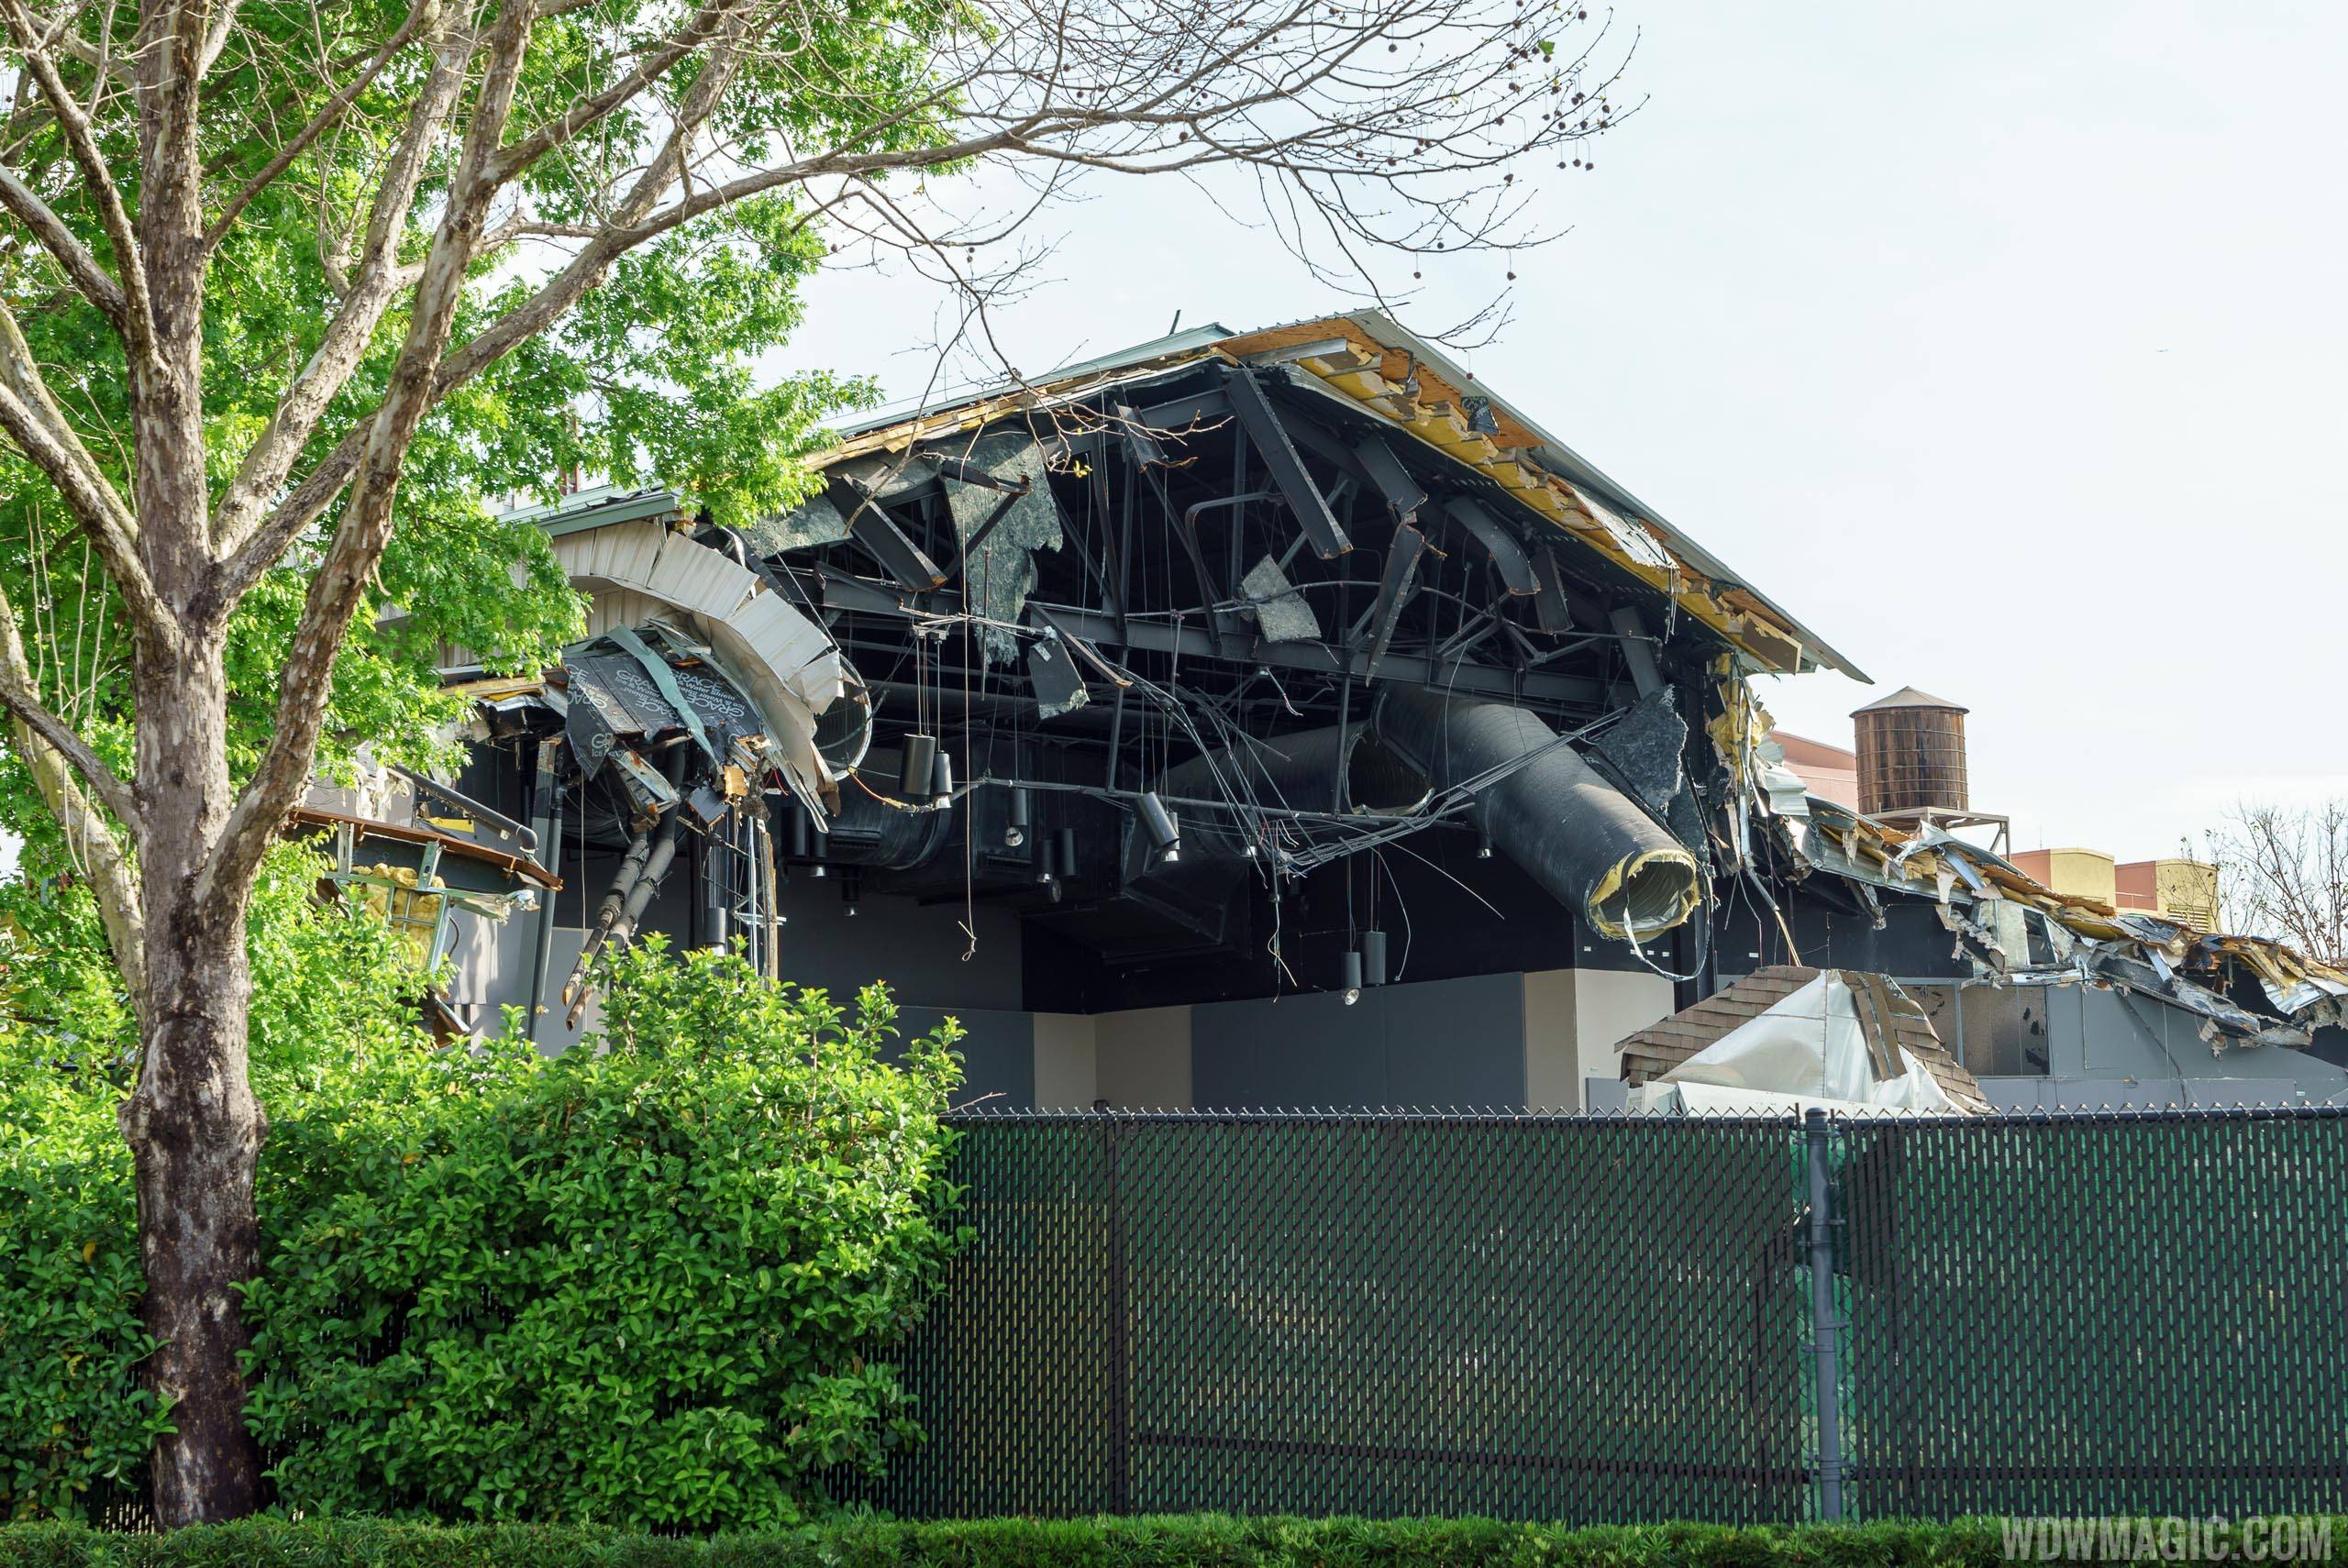 PHOTOS - Premiere Theater demolition underway at Disney's Hollywood Studios